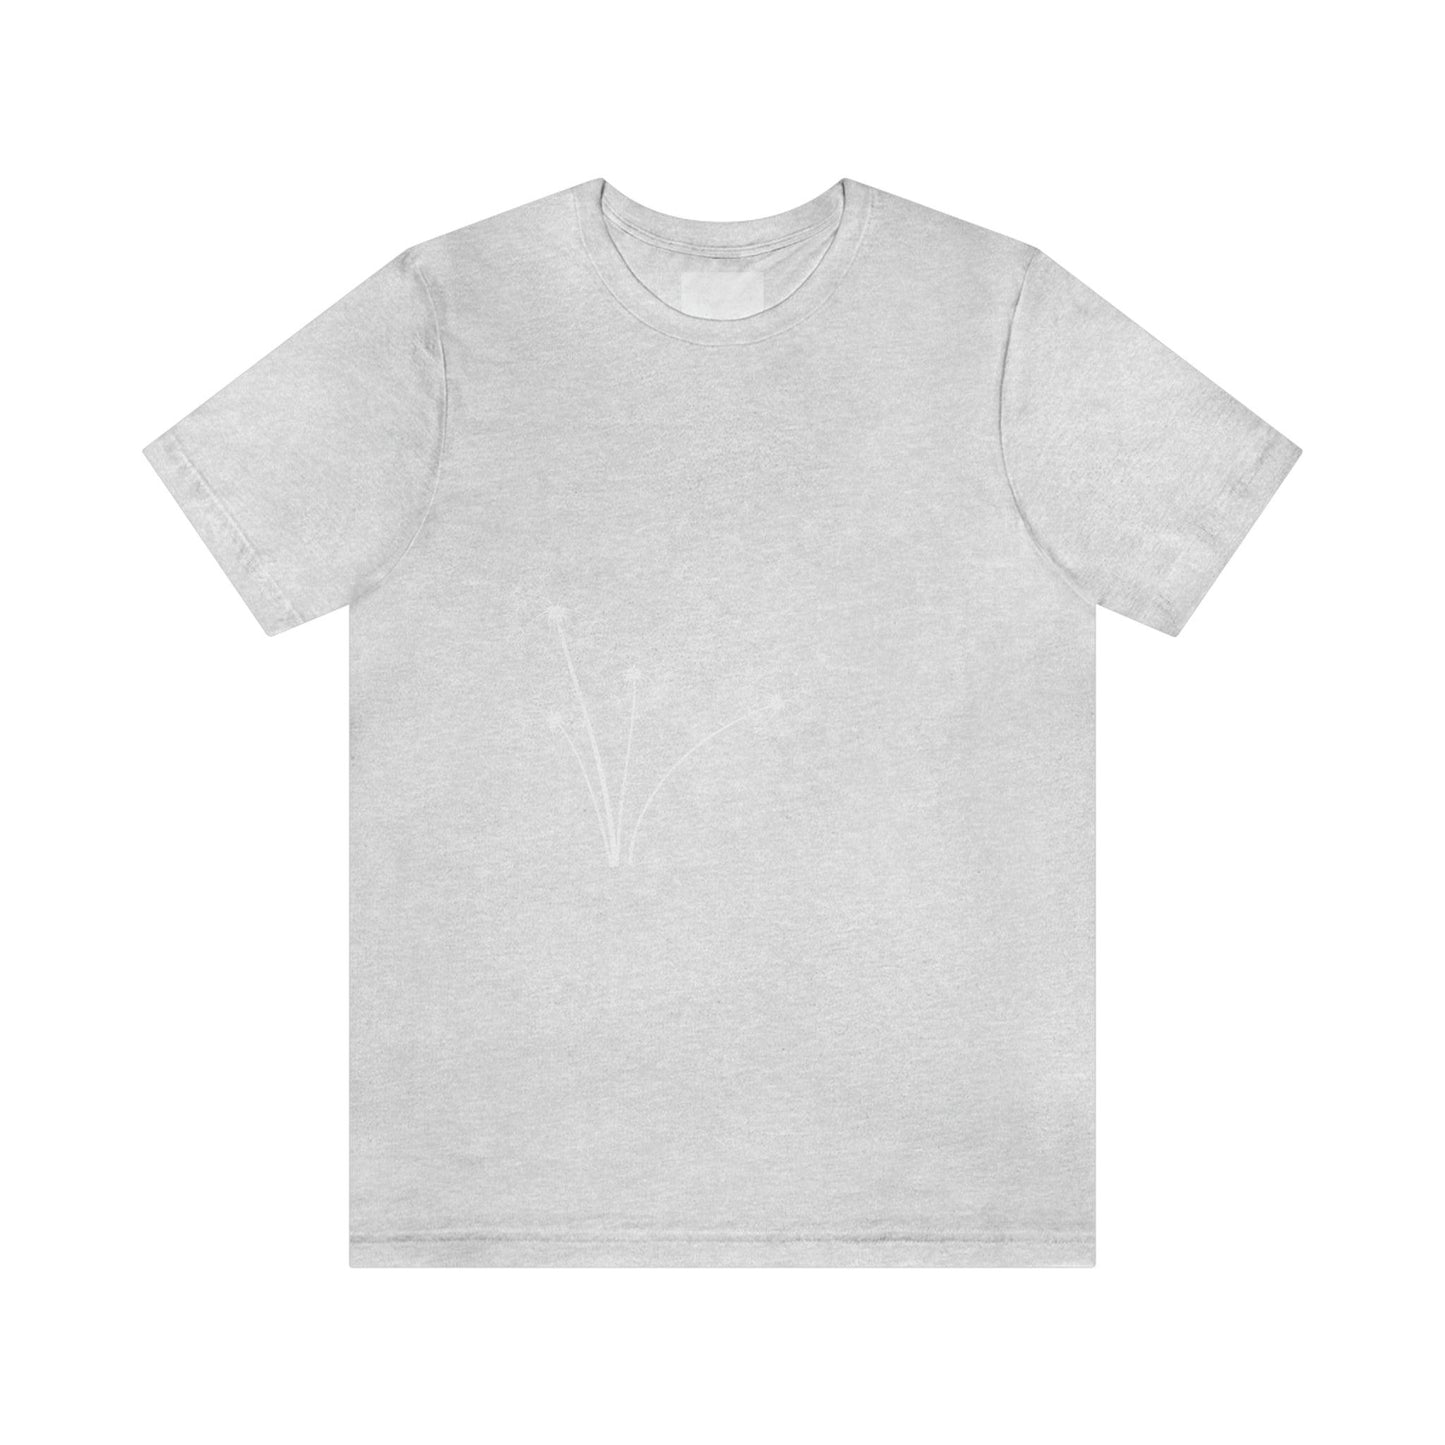 Dandelion Shirt, Boho Windflower Shirt, Dandelion Shirt for Her, Windflower Tee, Meditation Gift, Yoga Shirt, Inspirational Shirt, Bday Tees - Giftsmojo